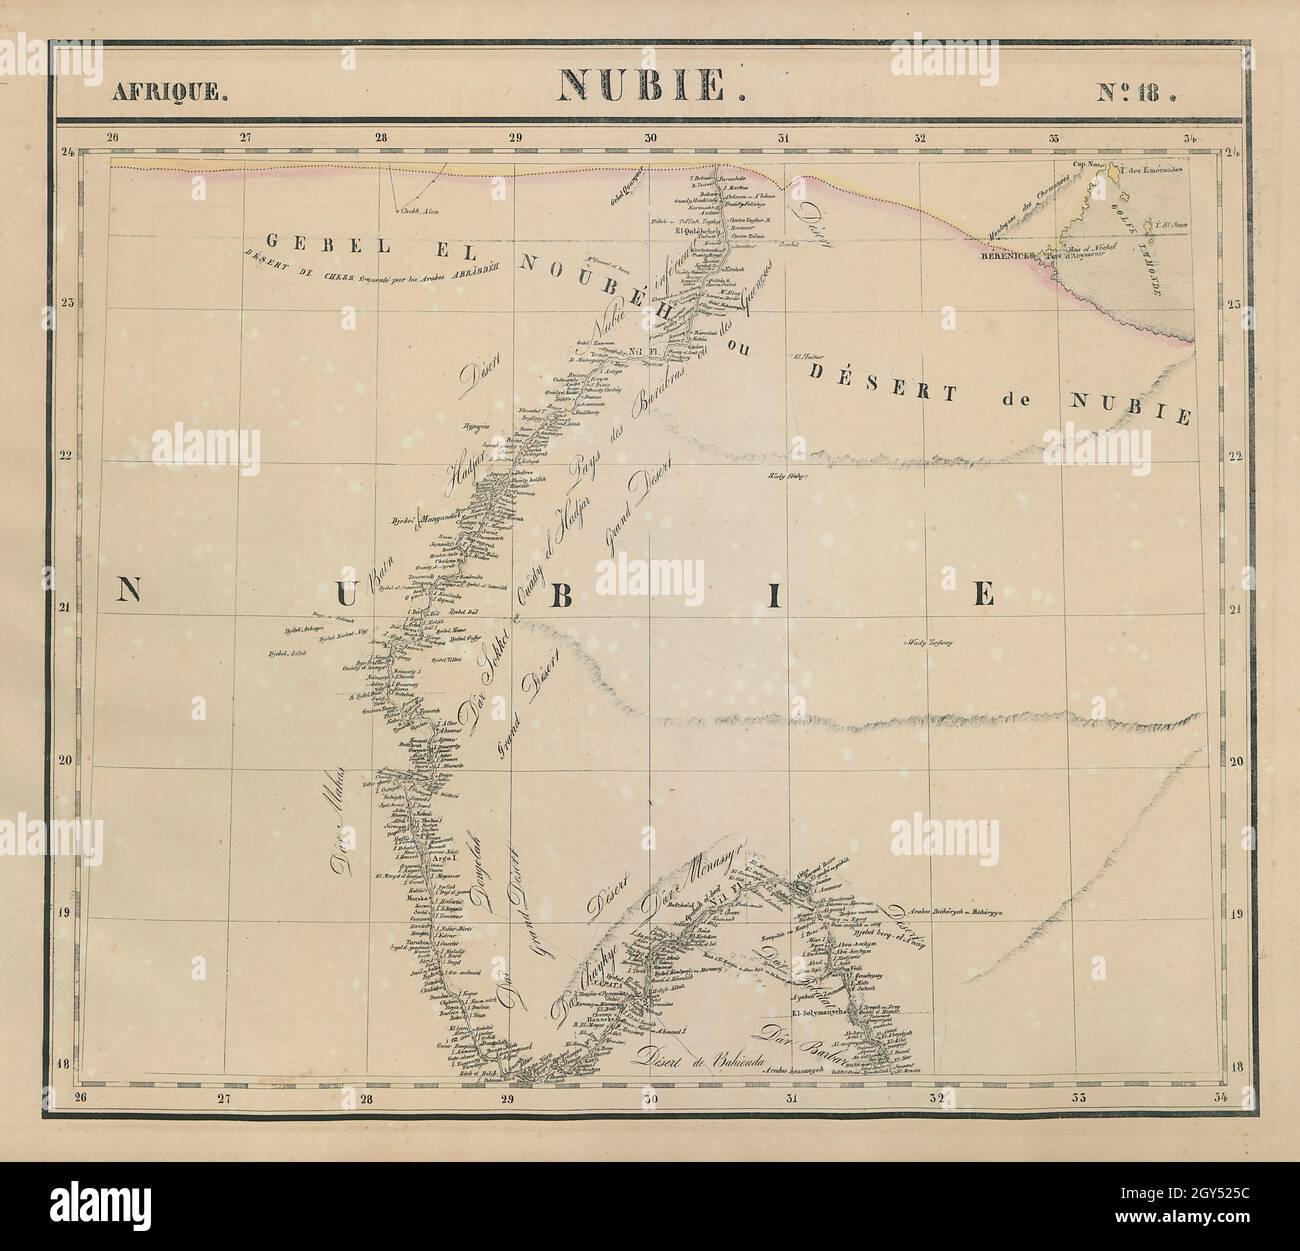 Afrique. Nubie #18. Valle del Nilo in Sudan ed Egitto meridionale. Mappa VANDERMAELEN 1827 Foto Stock